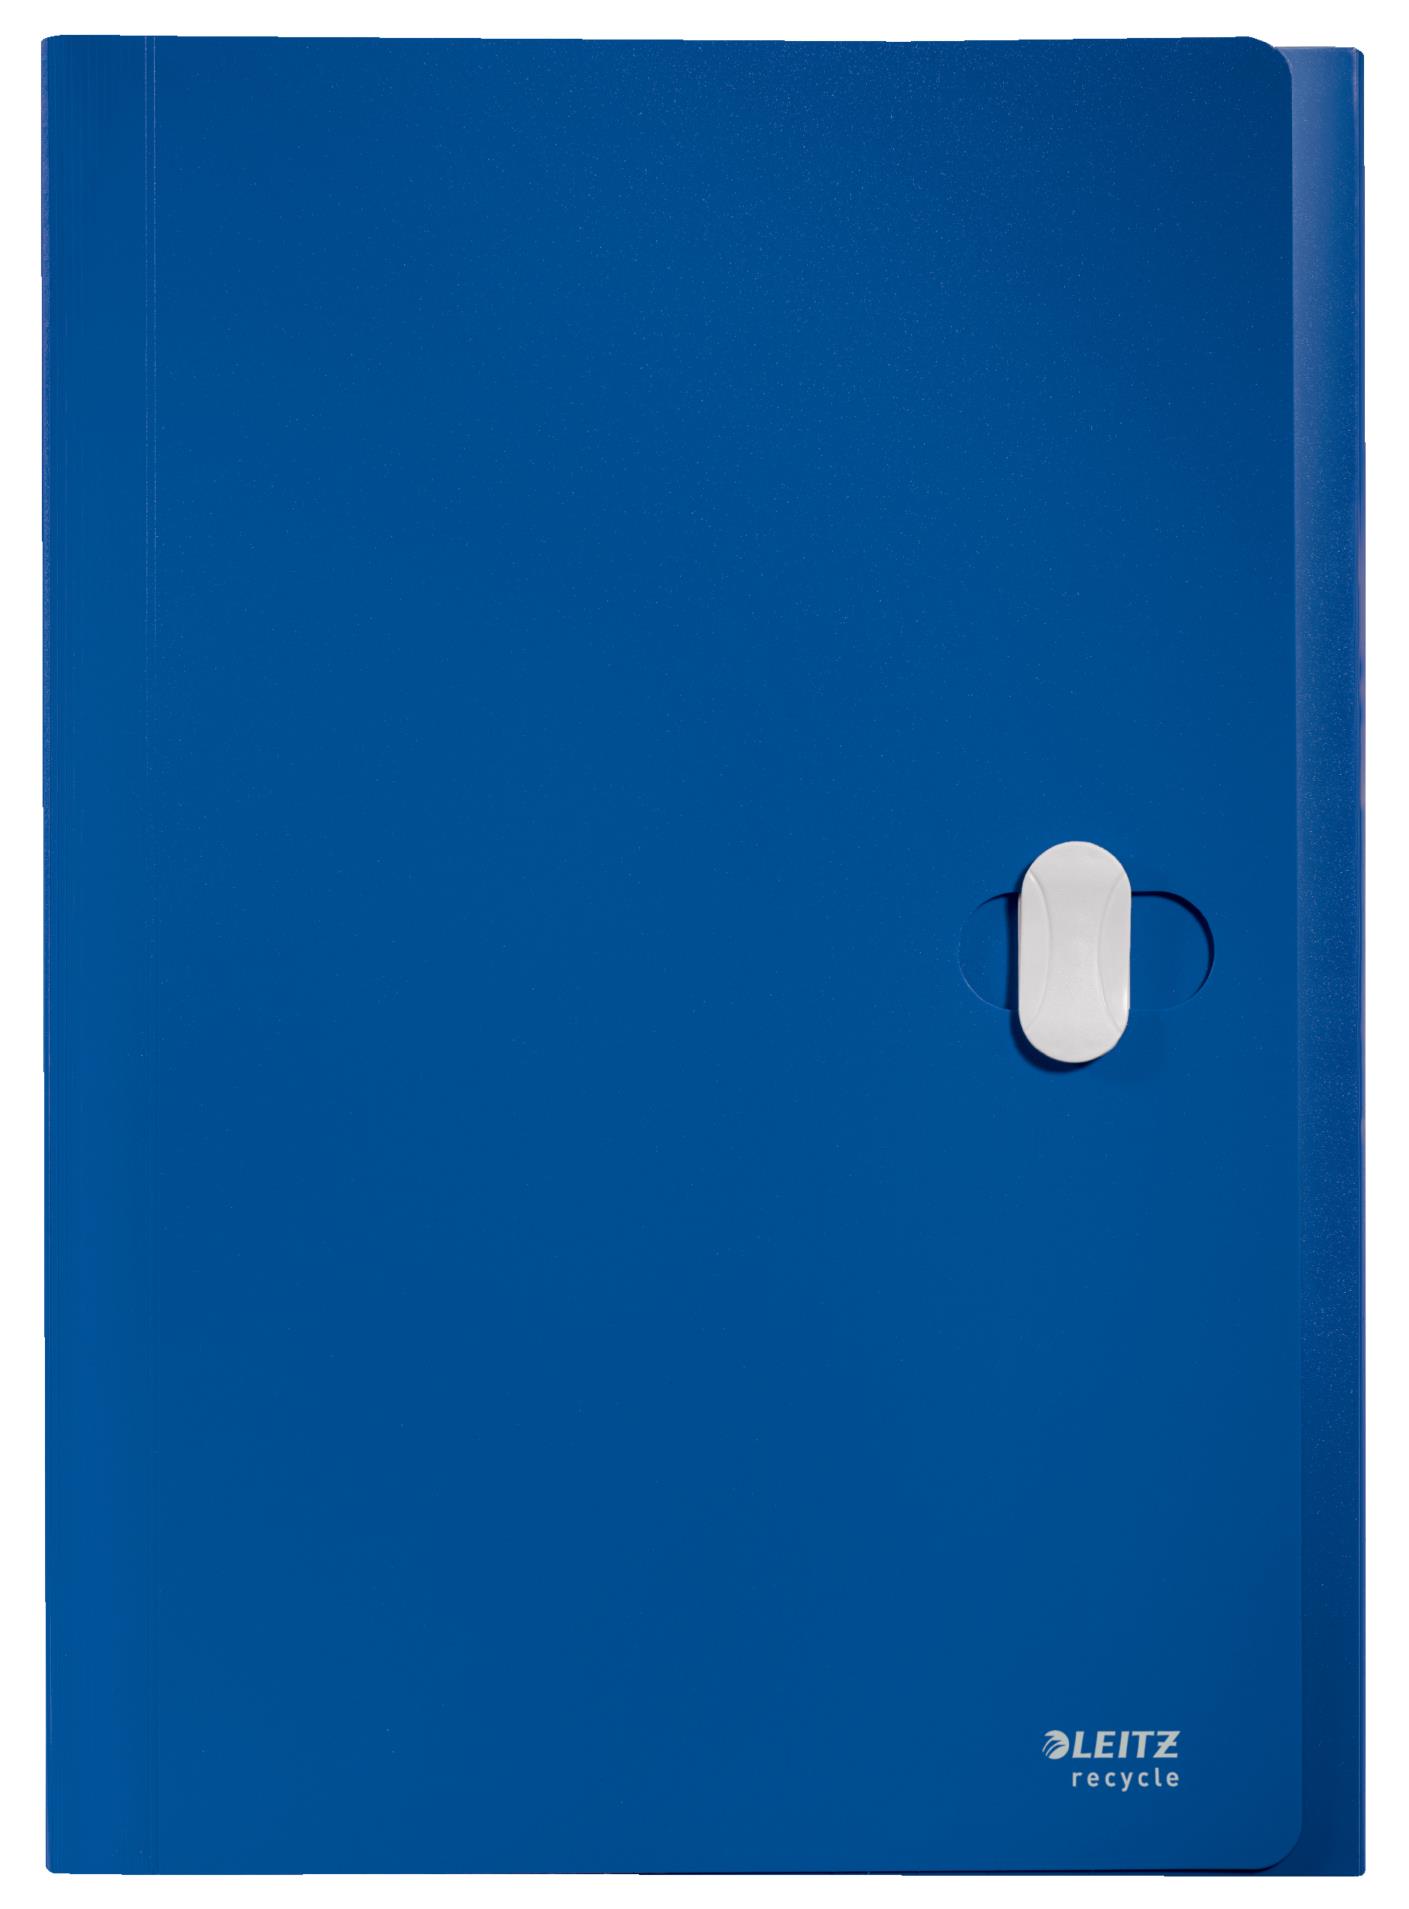 Aktovka s přihrádkami Leitz RECYCLE - A4, ekologická, 5 přihrádek, modrá